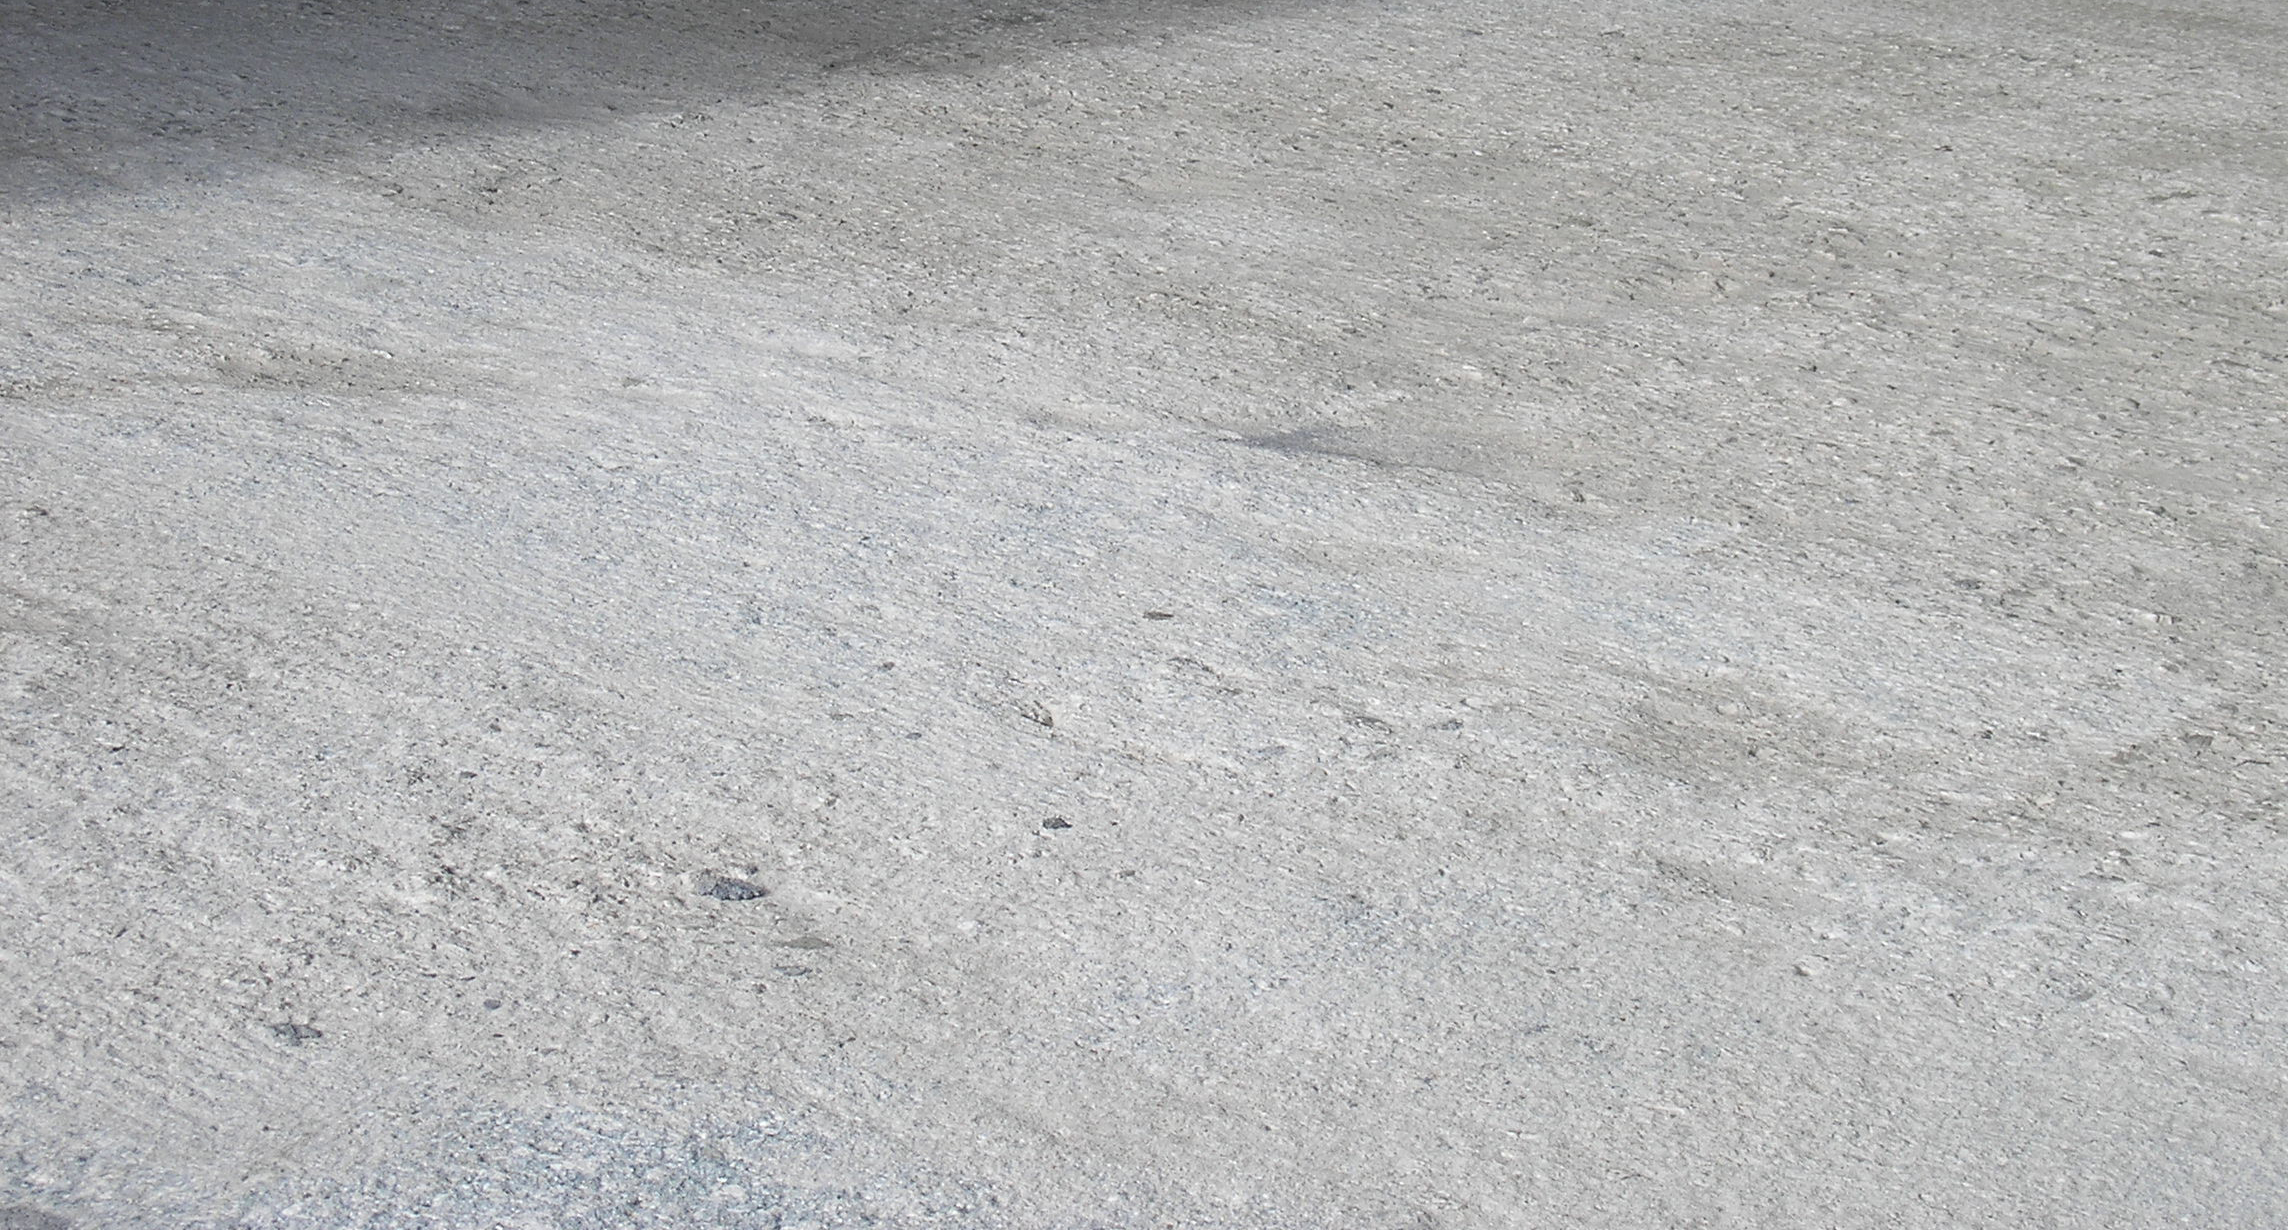 Repairing rain or water damaged concrete slabs : Arcon Supplies